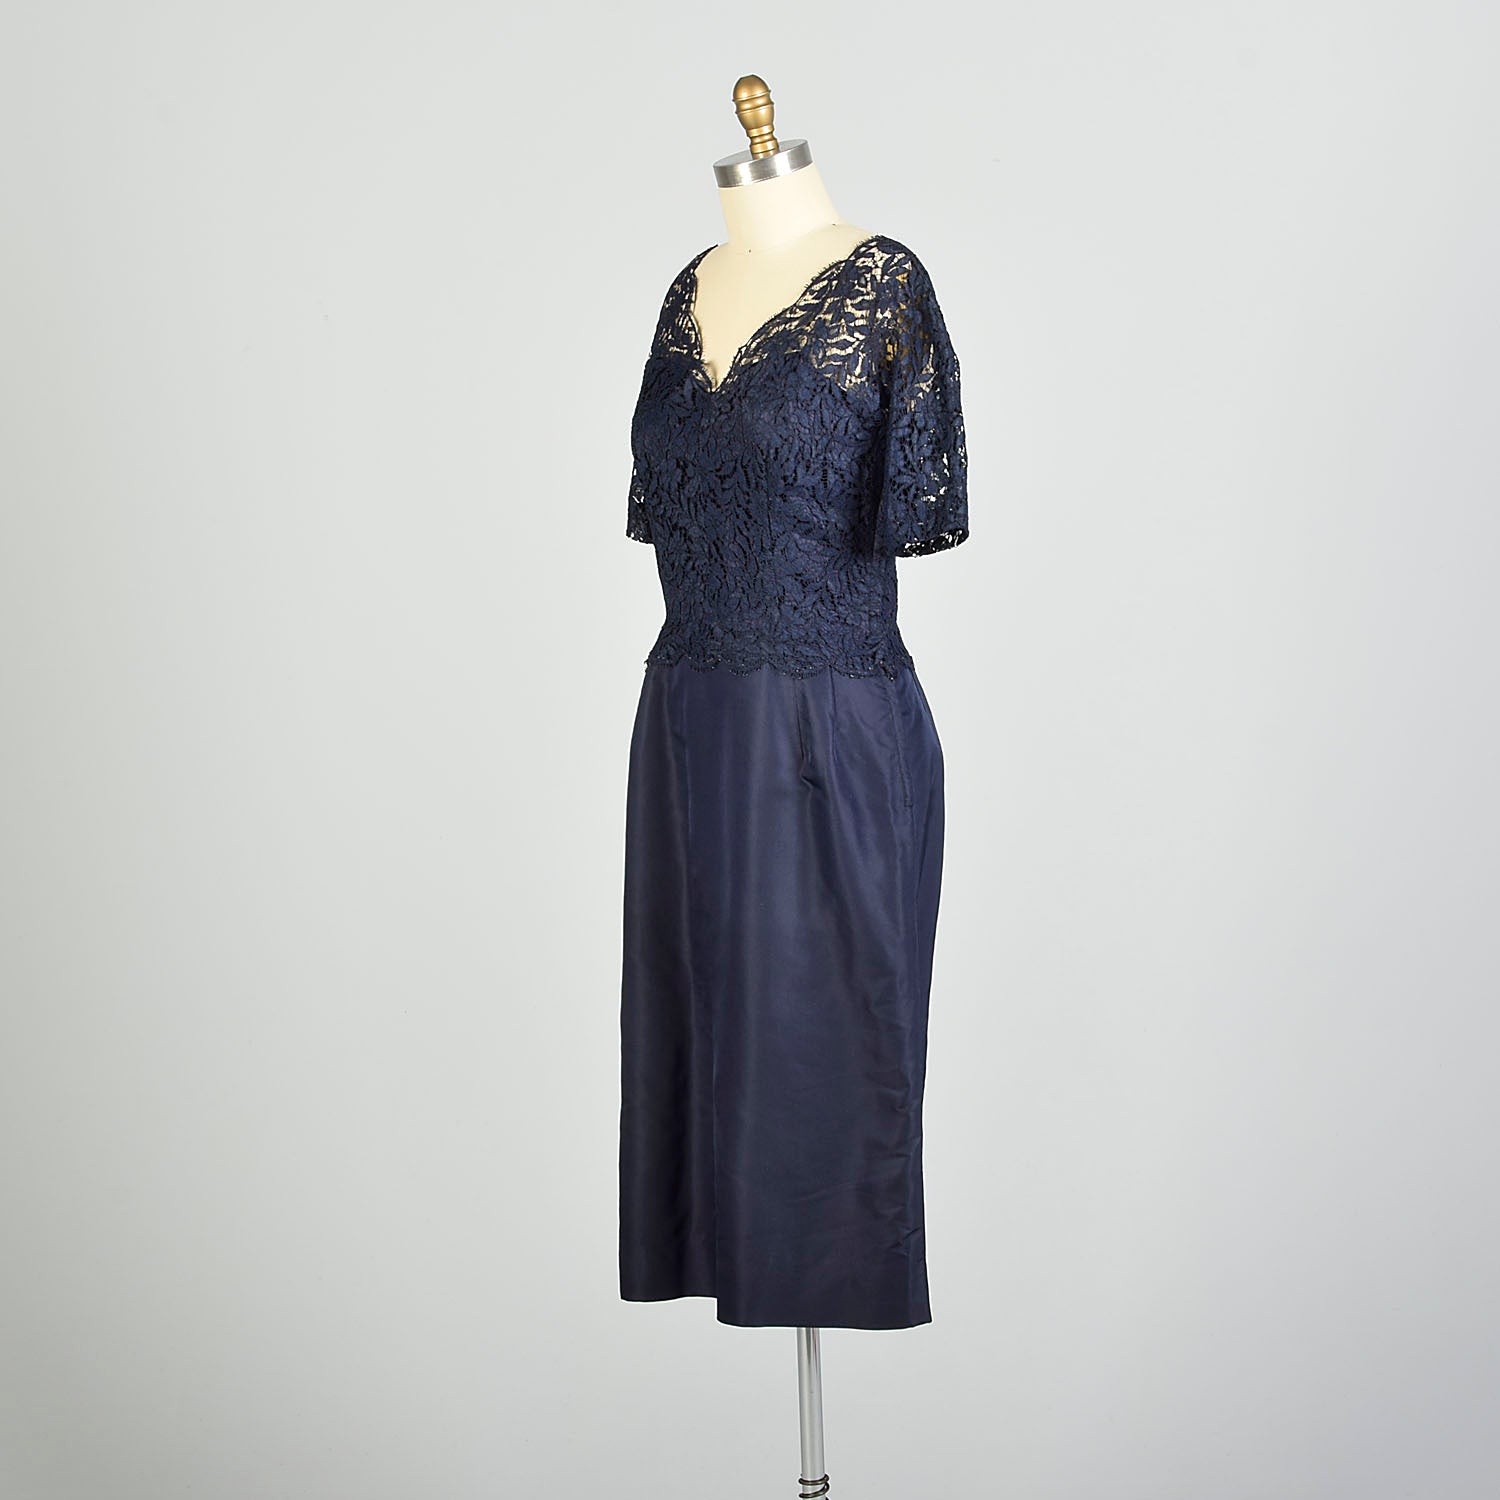 Large 1950s Navy Blue Cocktail Dress Illusion Neckline Lace Taffeta Evening Dress